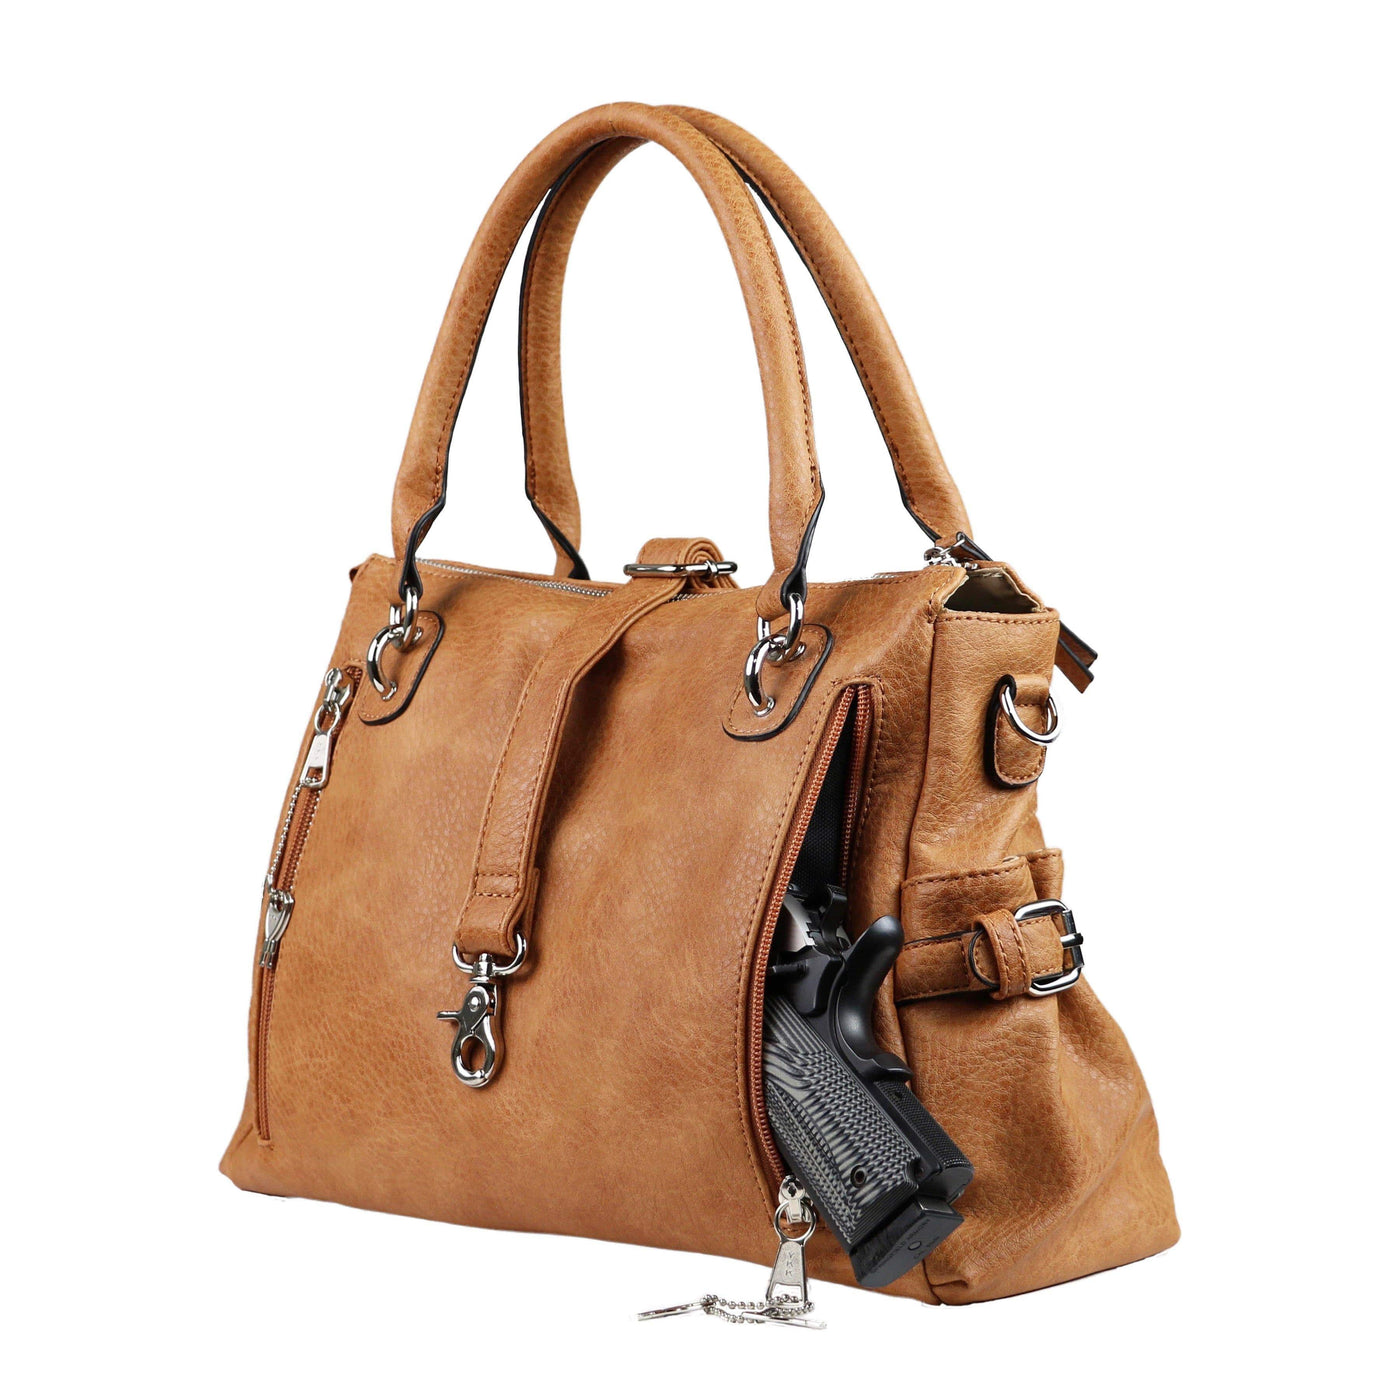 Jessica moor womens handbags - Gem